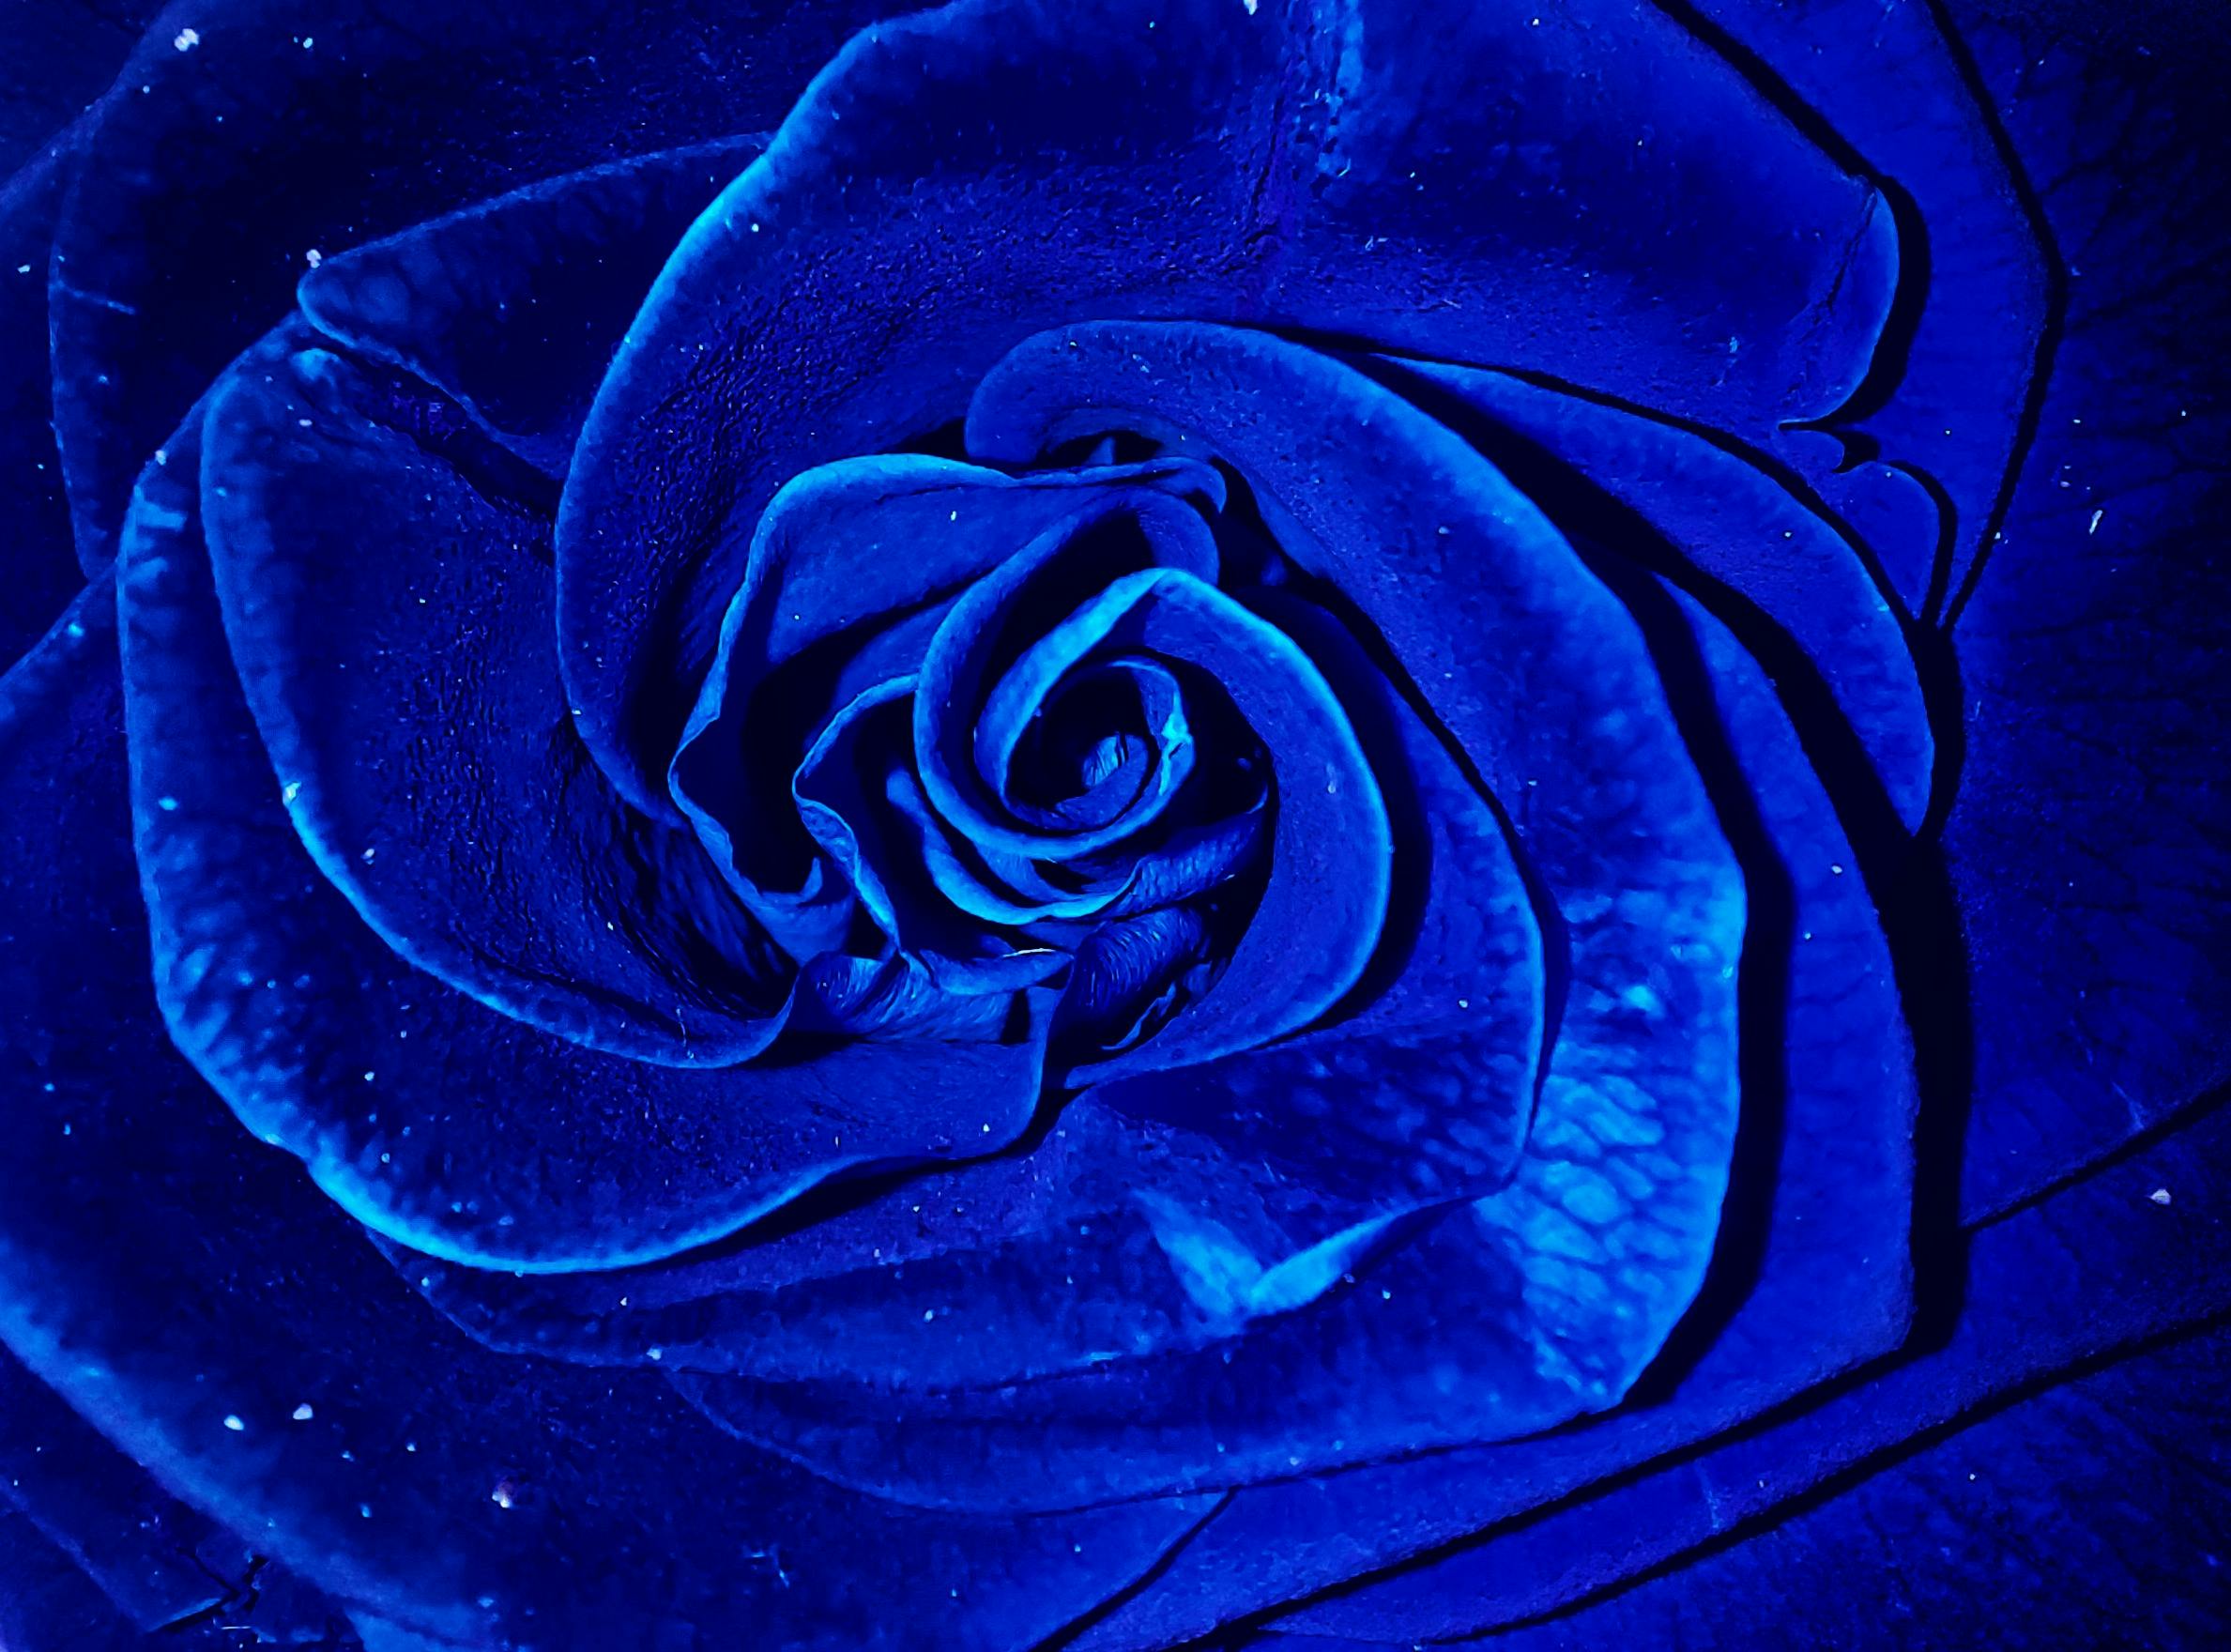 224912 Blue Rose Wallpaper Images Stock Photos  Vectors  Shutterstock